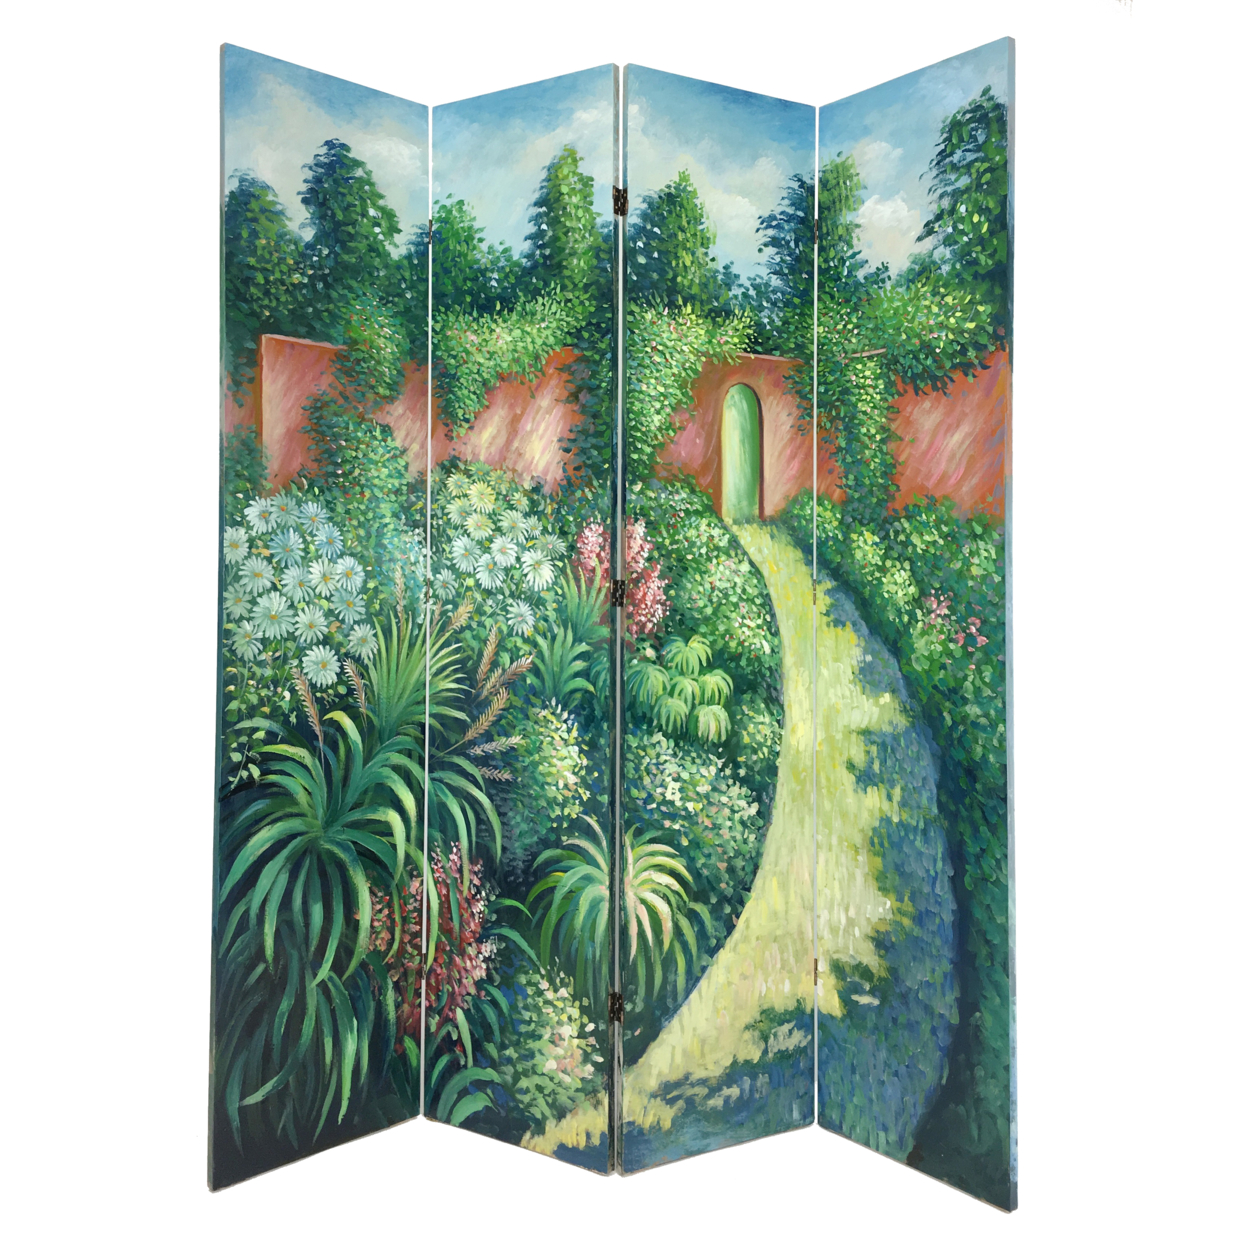 Wooden Double Sided 4 Panel Room Divider With Garden Scenes, Multicolor- Saltoro Sherpi